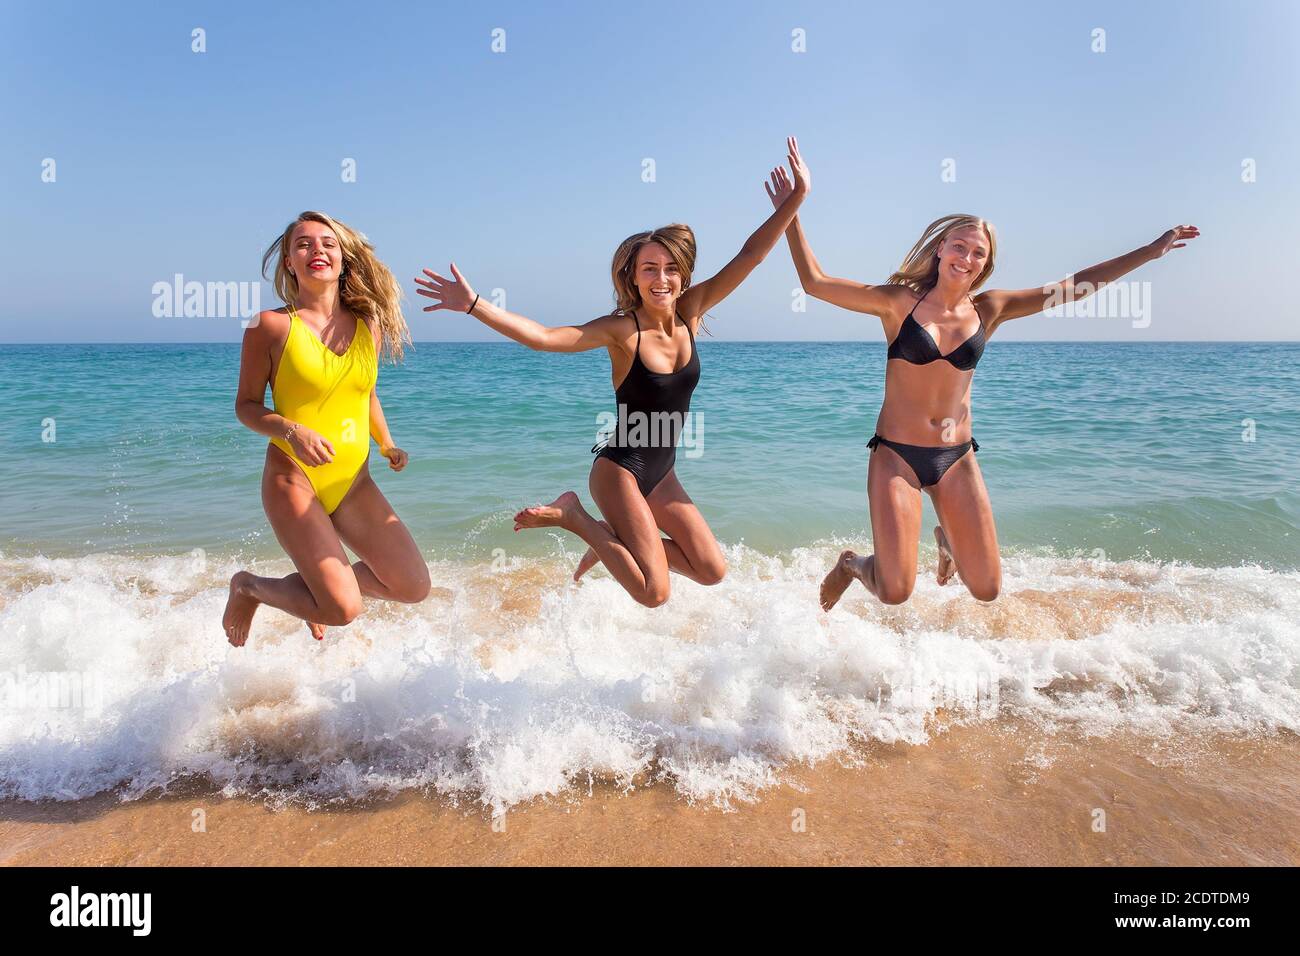 Three girls jumping on beach near sea Stock Photo